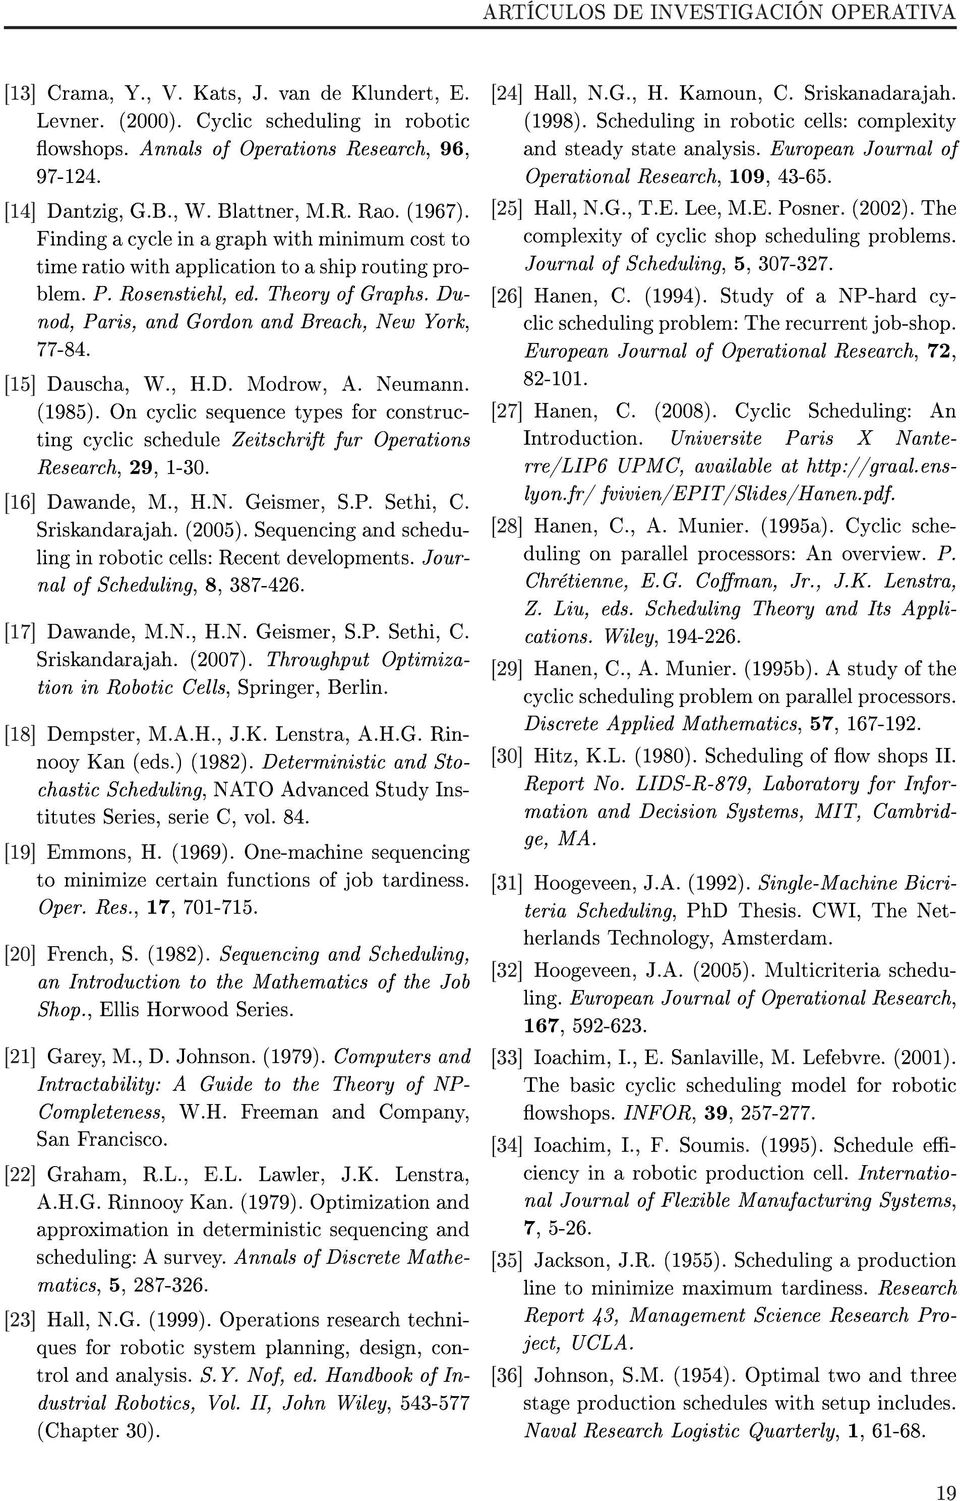 [15] Dauscha, W., H.D. Modrow, A. Neumann. (1985). On cyclic sequence types for constructing cyclic schedule Zeitschrift fur Operations Research, 29, 1-30. [16] Dawande, M., H.N. Geismer, S.P.